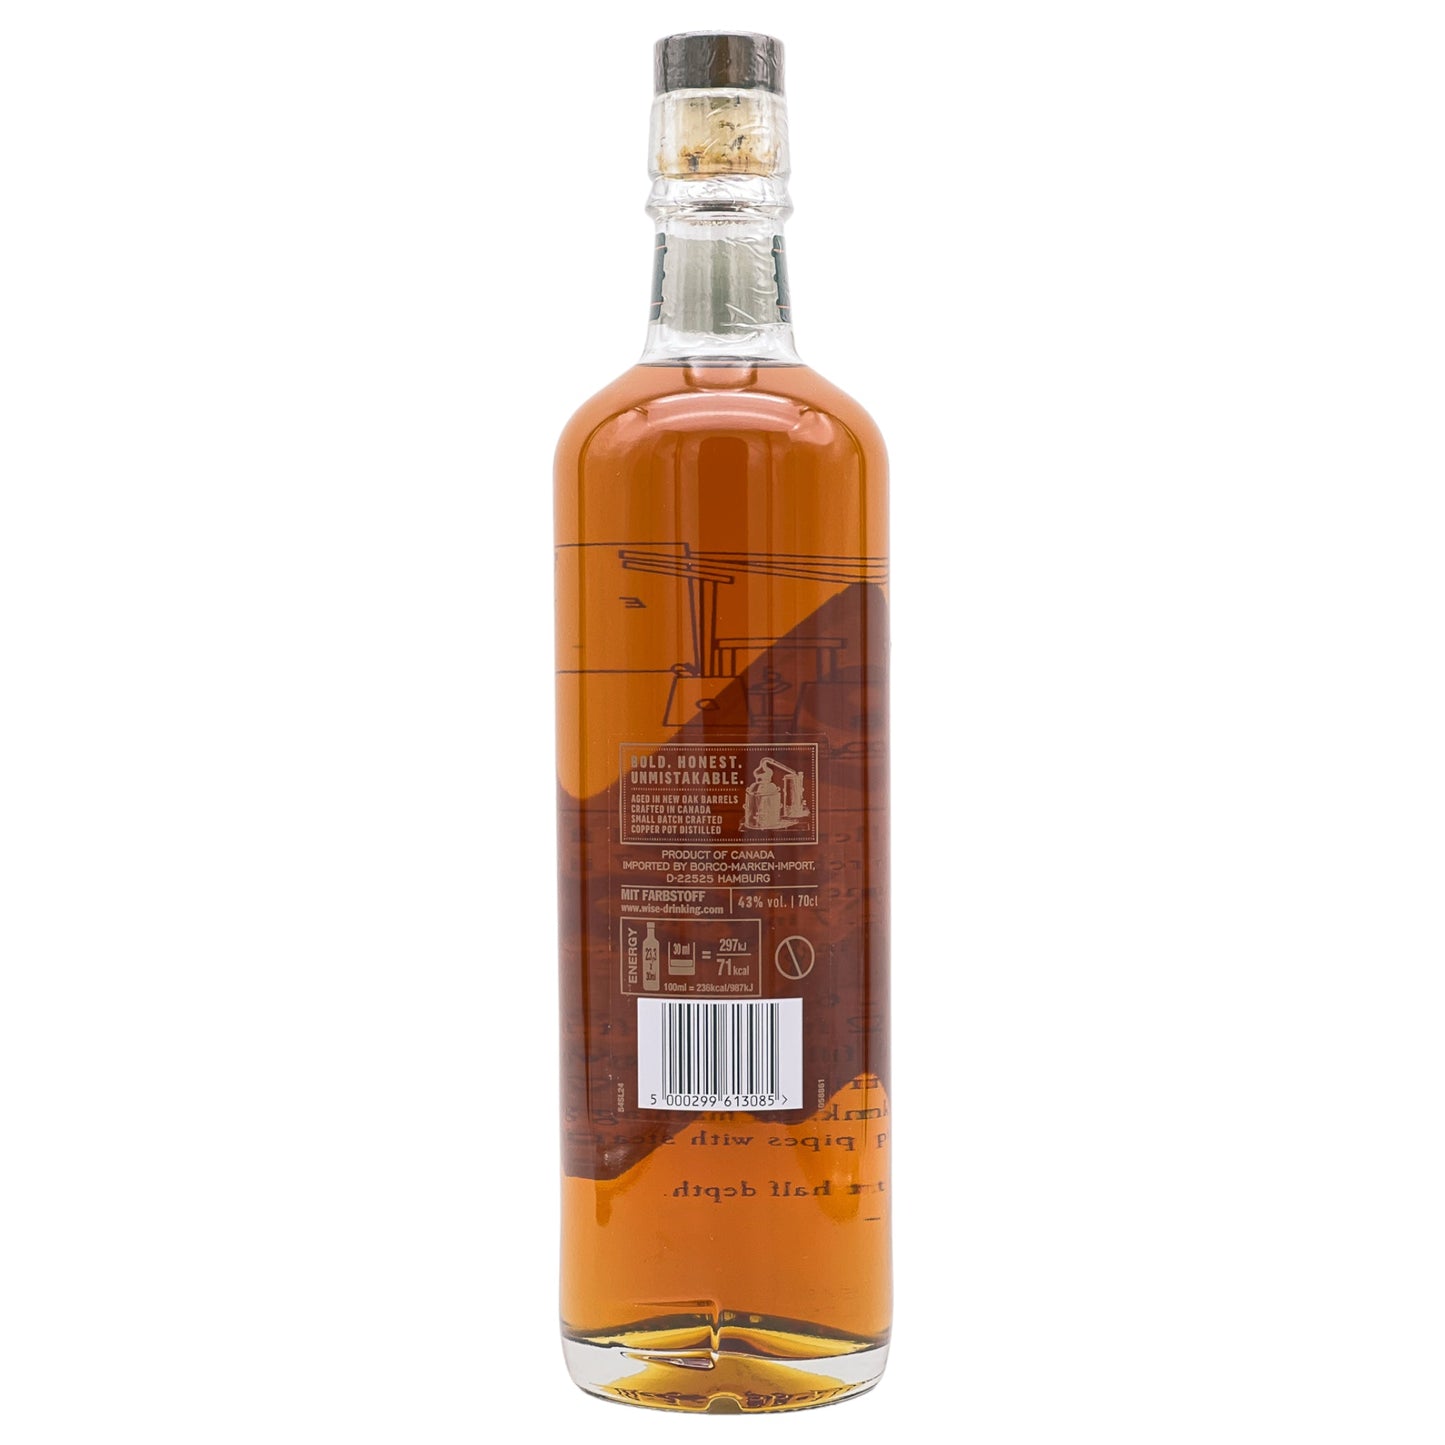 LOT NO. 40 | 100% Rye | Small Batch | Canadian Rye Whisky | 0,7l | 43%GET A BOTTLE